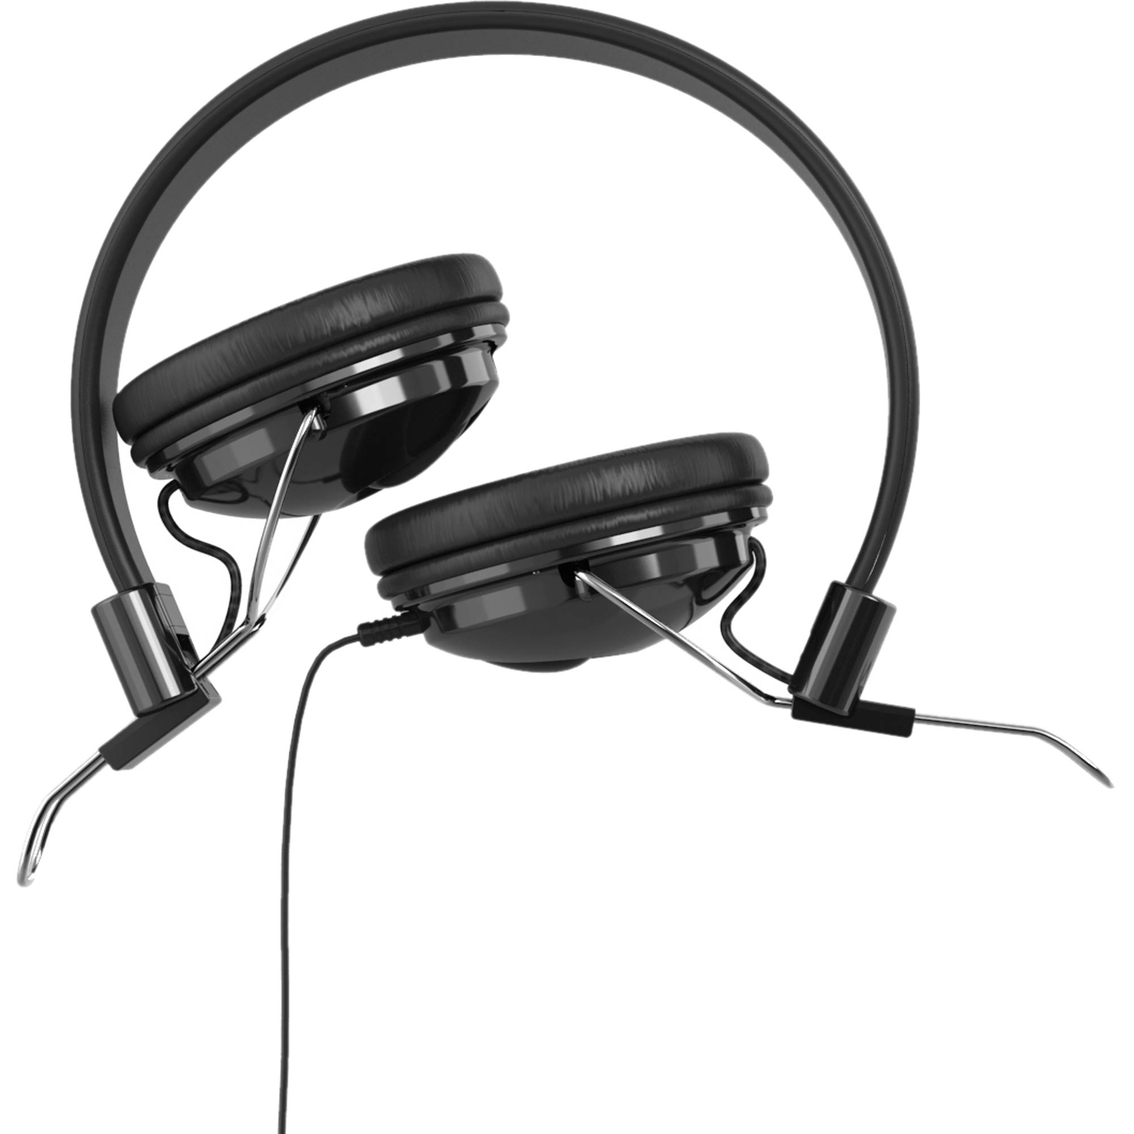 Patrionics Stereo LW Headphones - Image 2 of 3